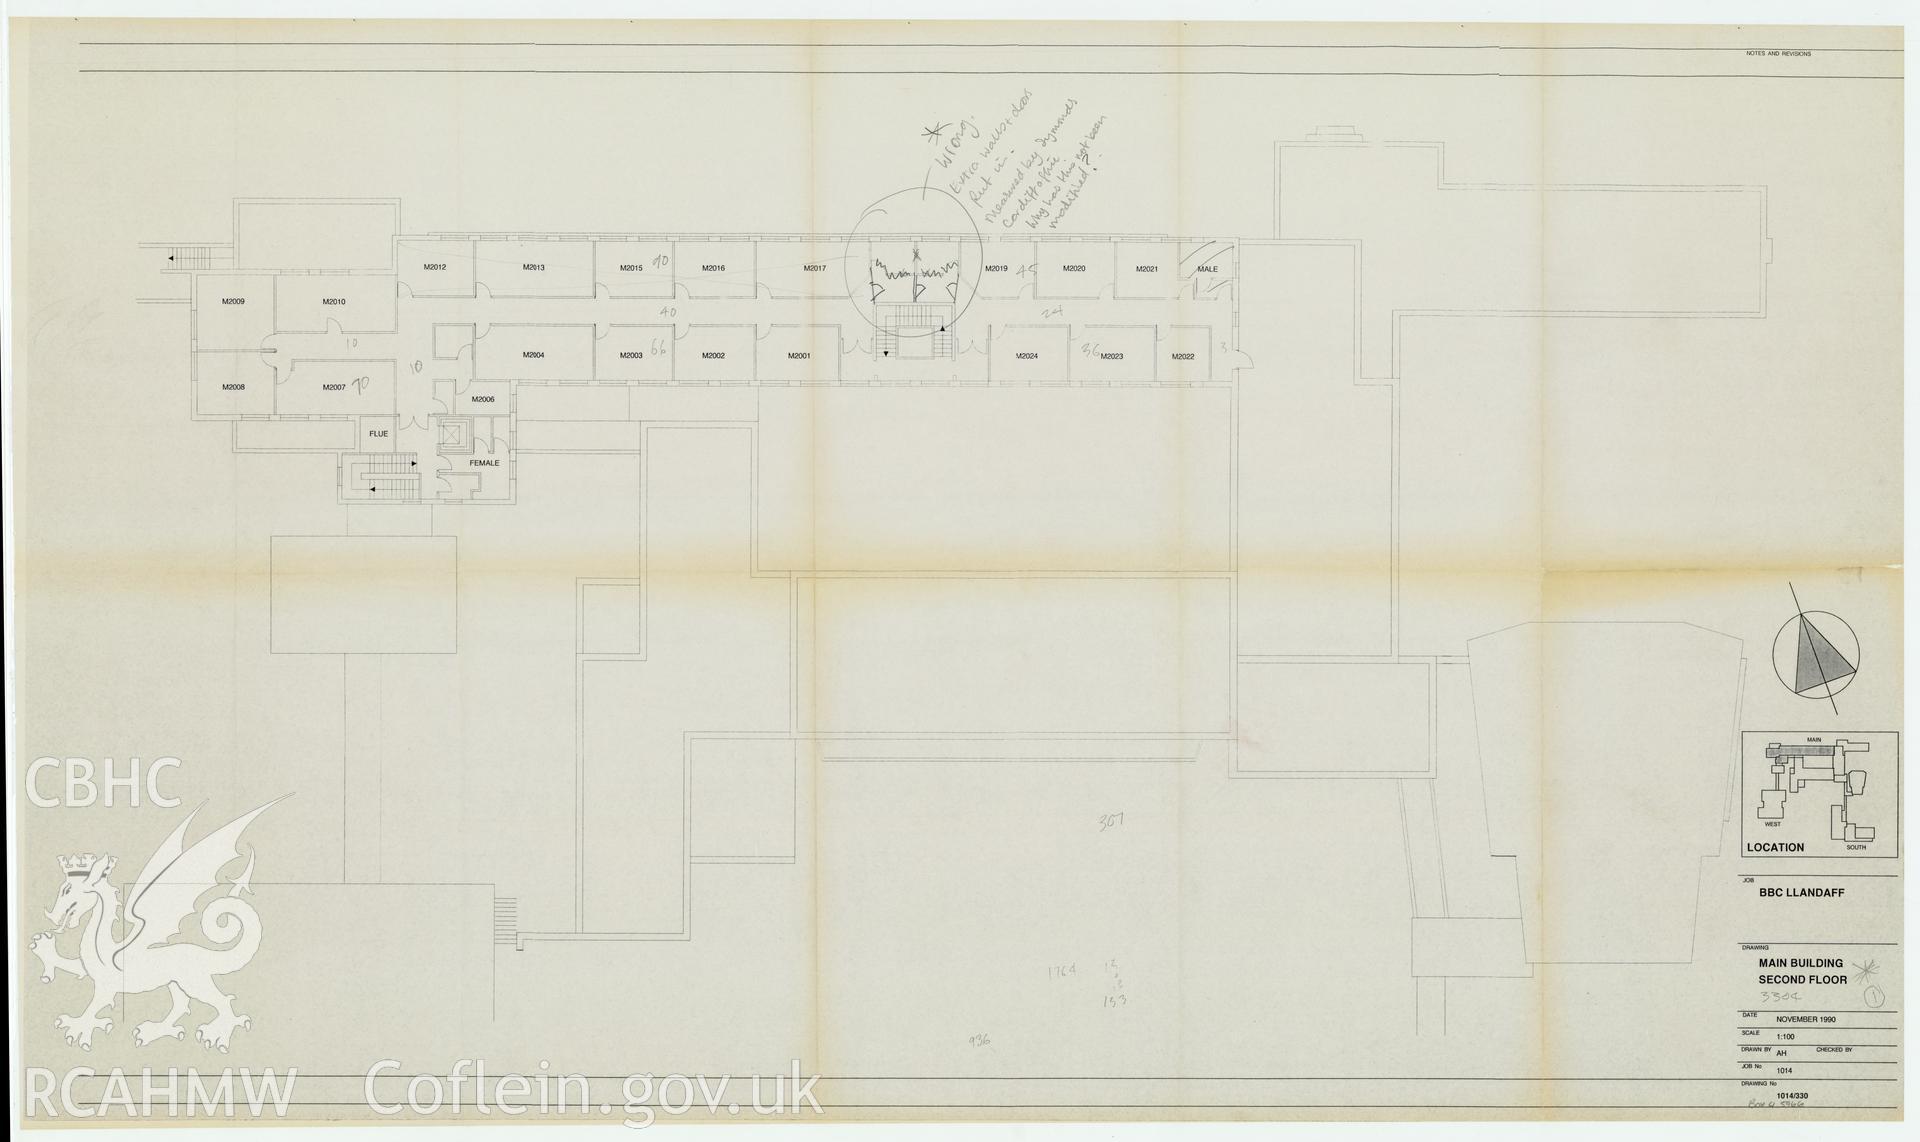 Digitised drawing plan of BBC Llandaff main building - drawing of the second floor plan. Drawing no. 1014/330, November 1990.